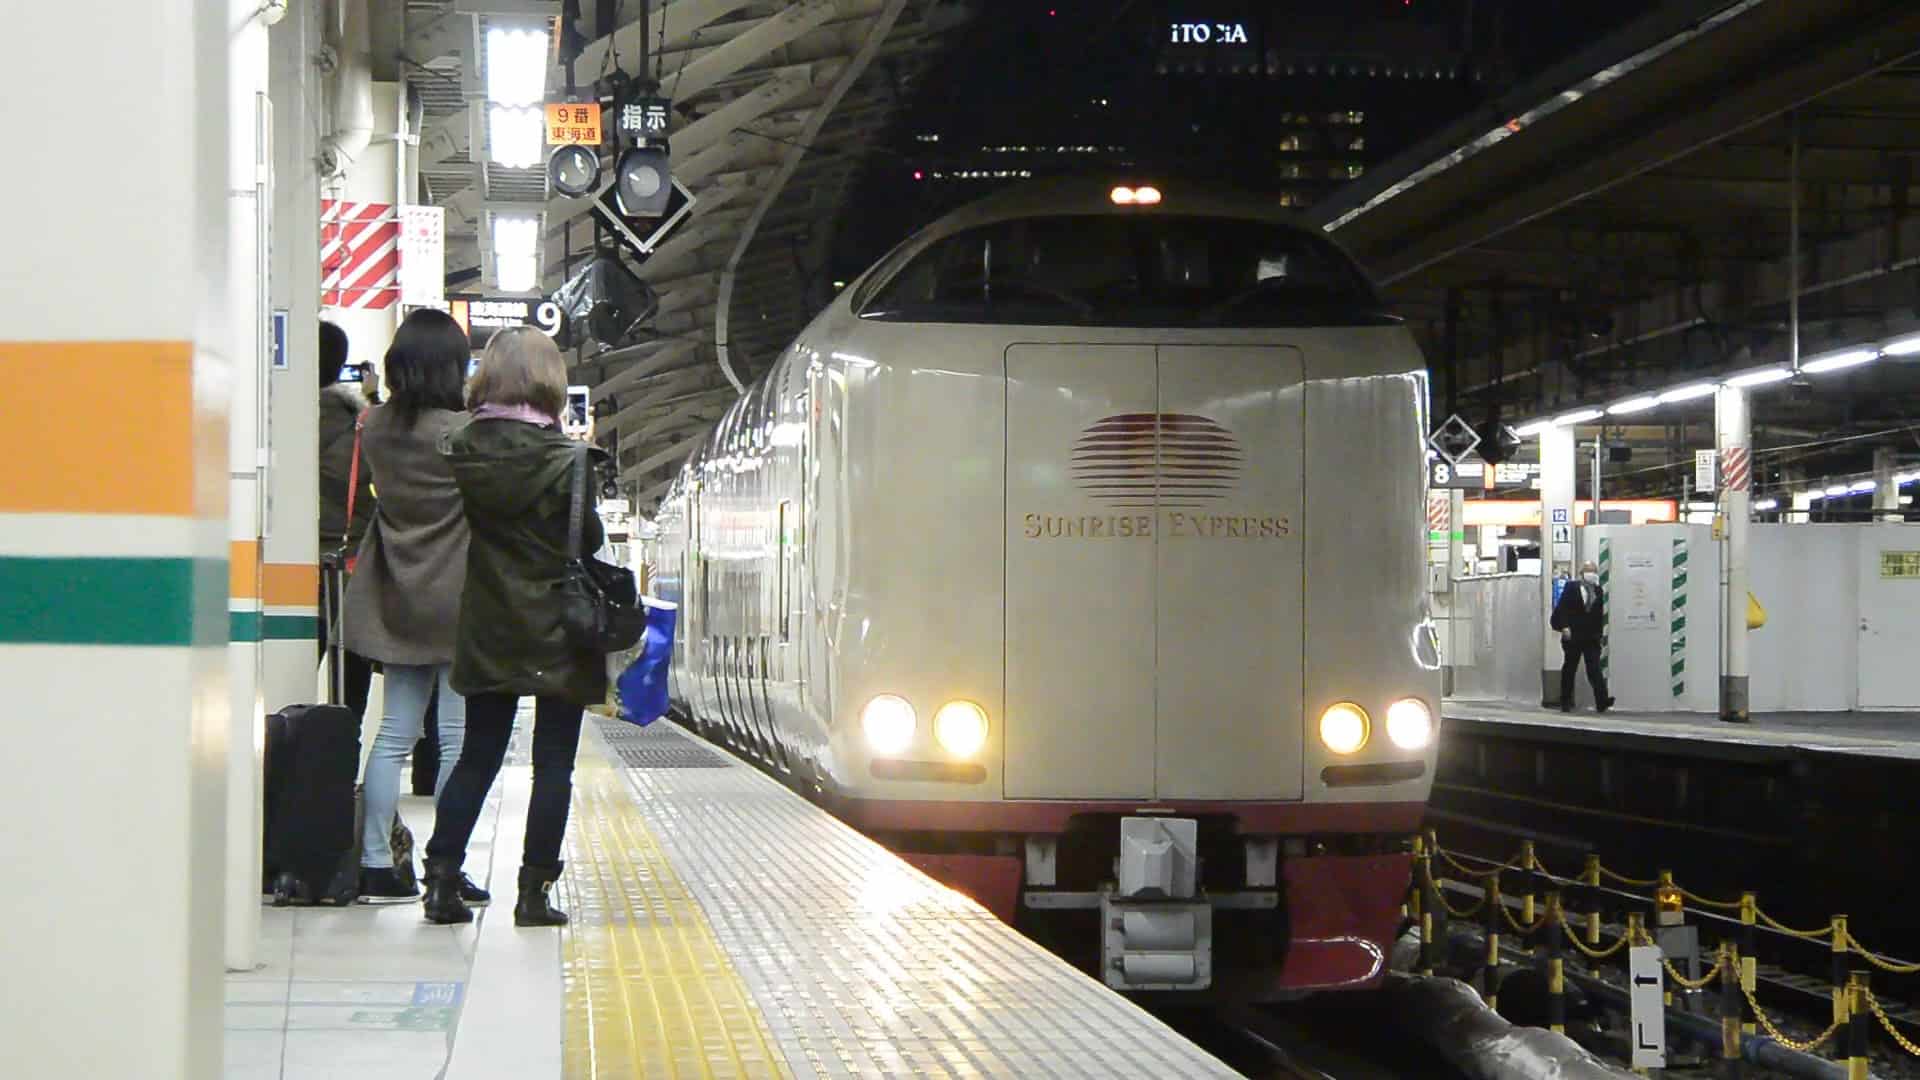 Sunrise express รถไฟนอนที่ญี่ปุ่น